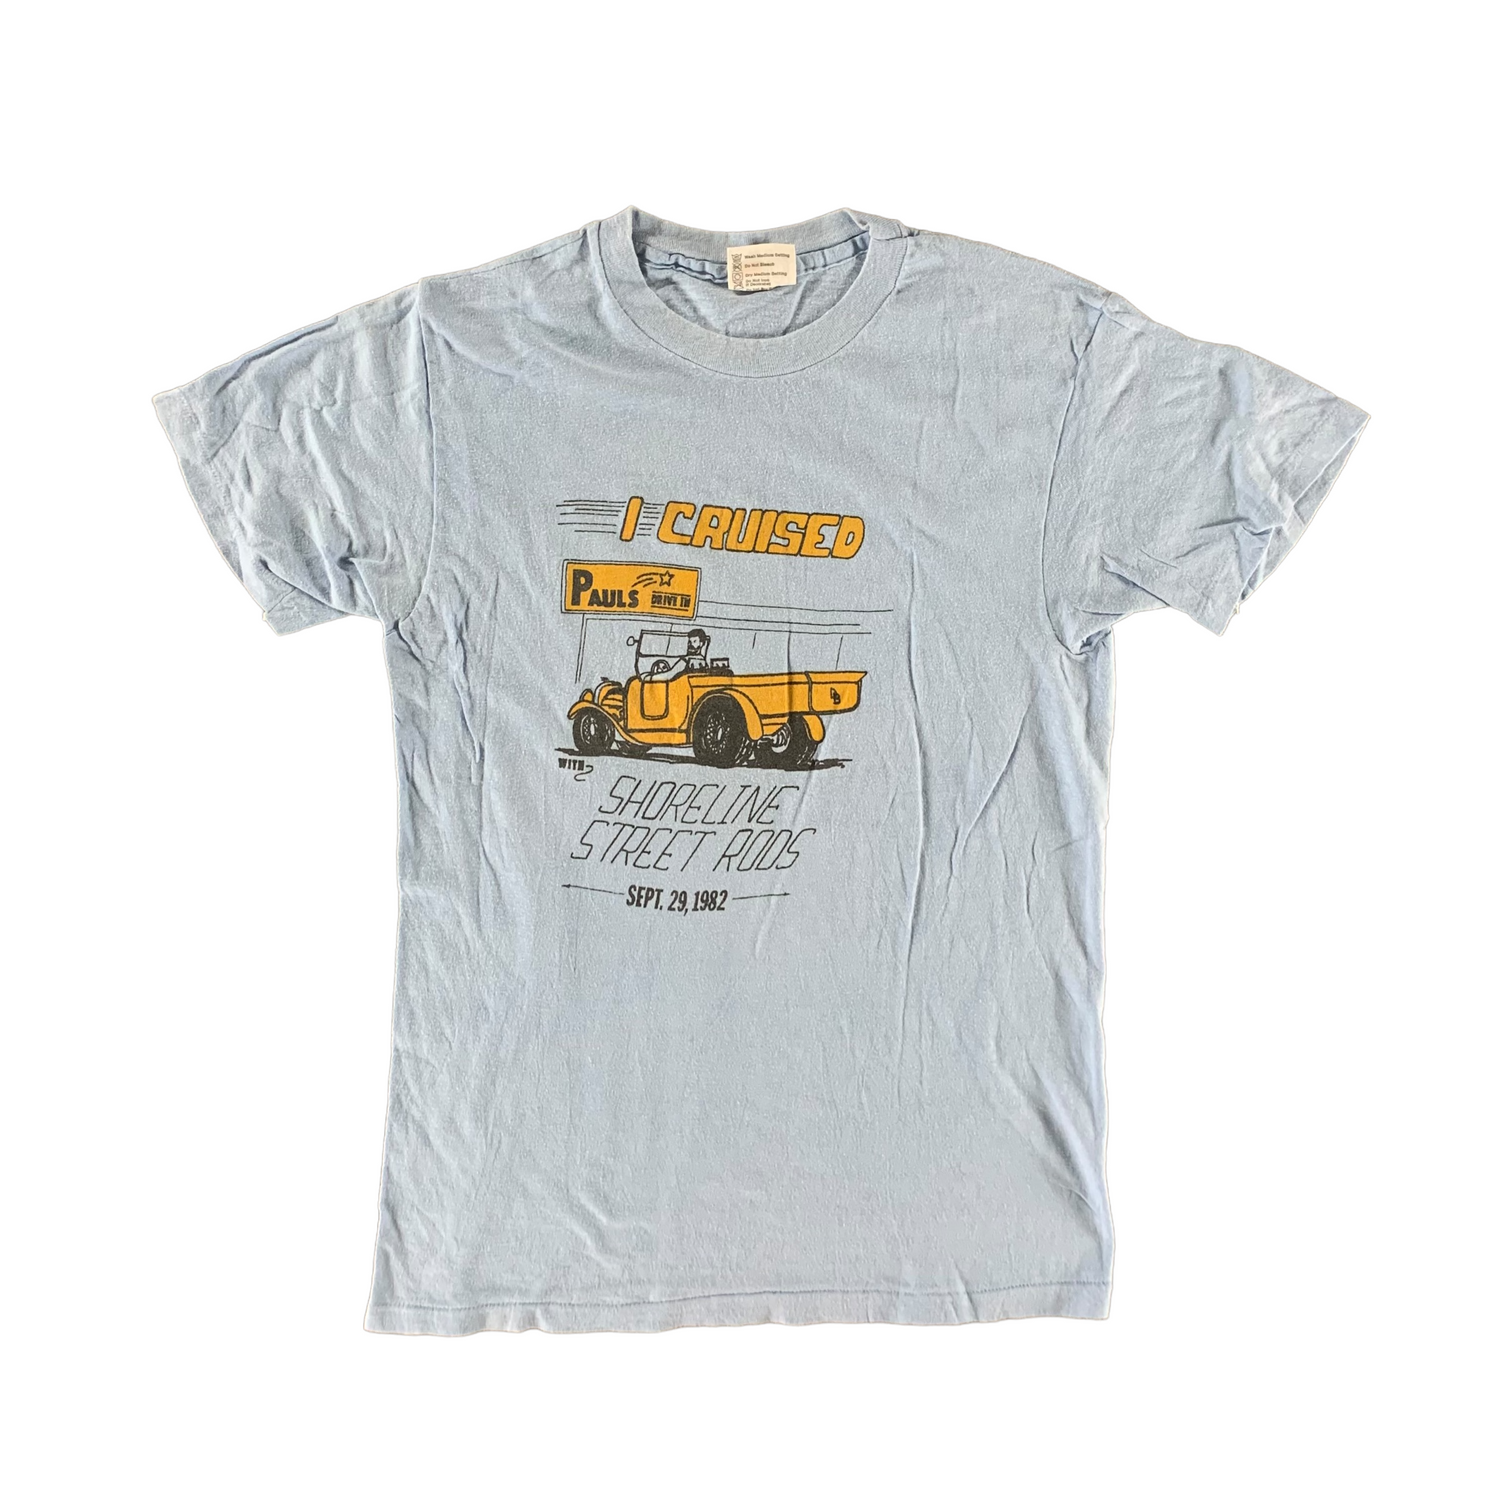 Vintage 1982 Drive In T-shirt size Medium